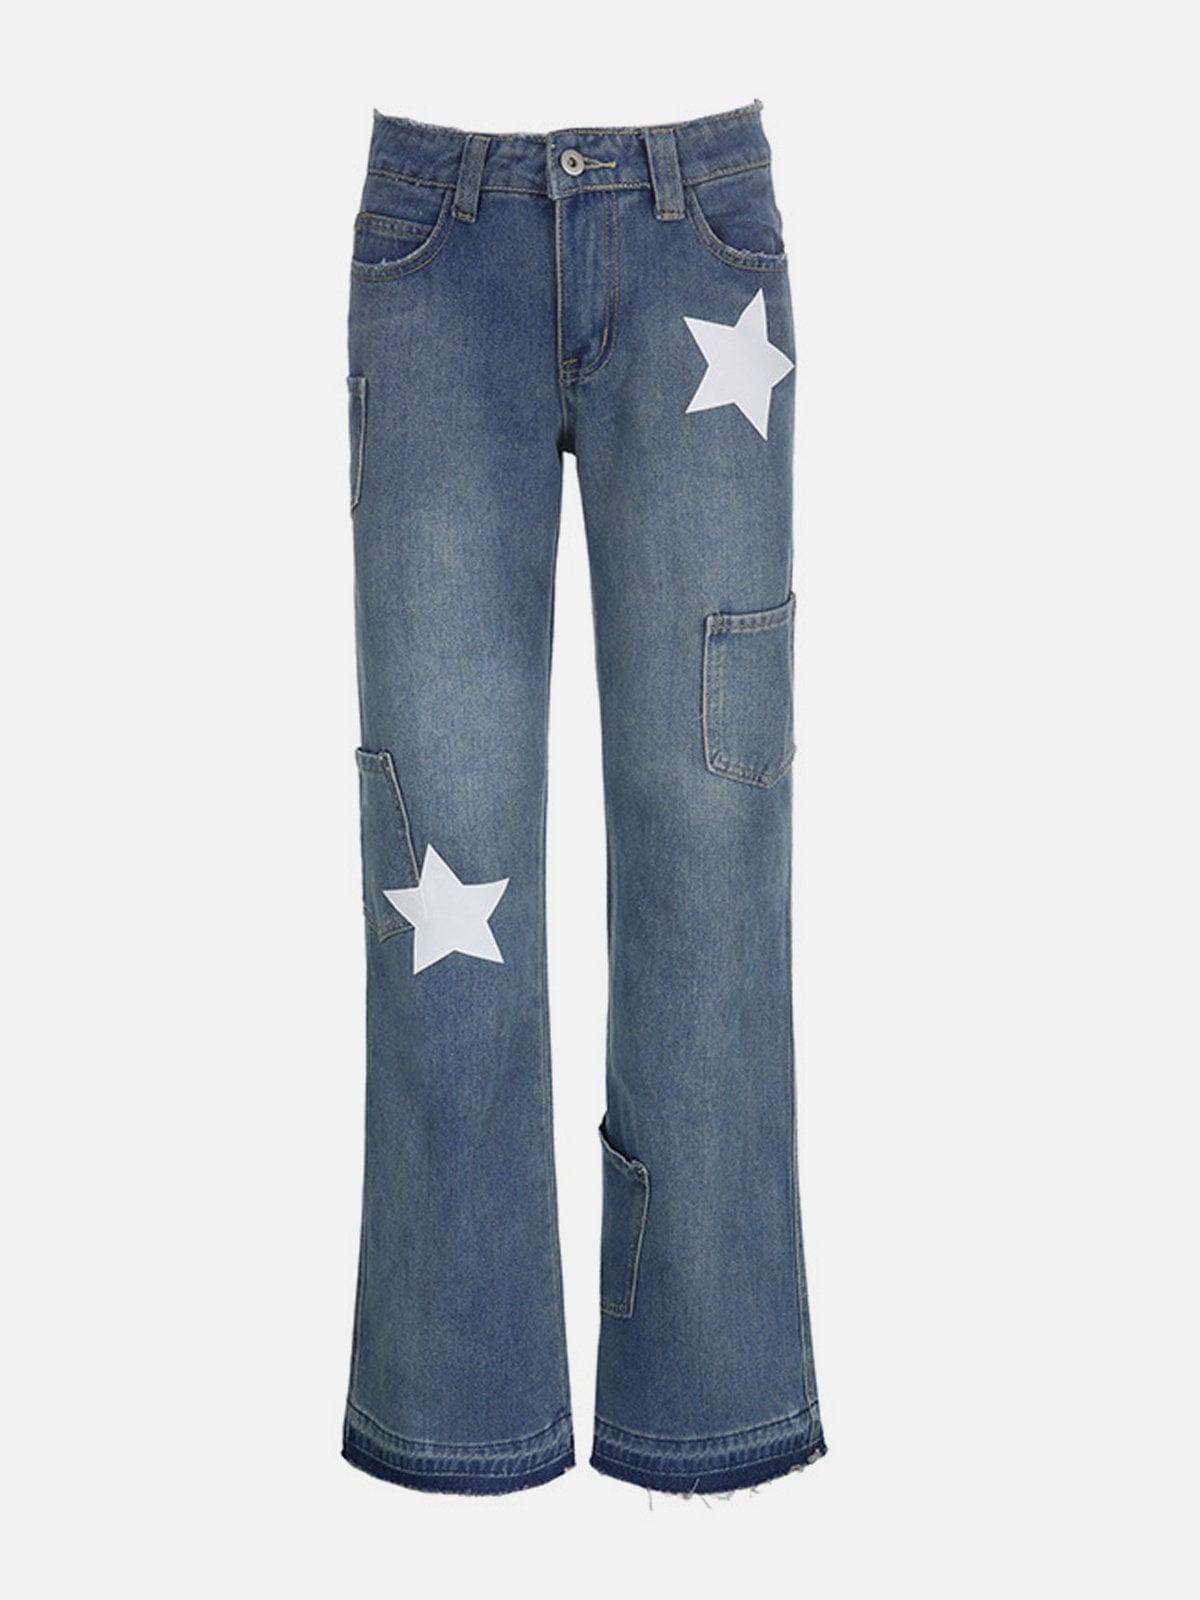 NEV Multi Pocket Star Jeans